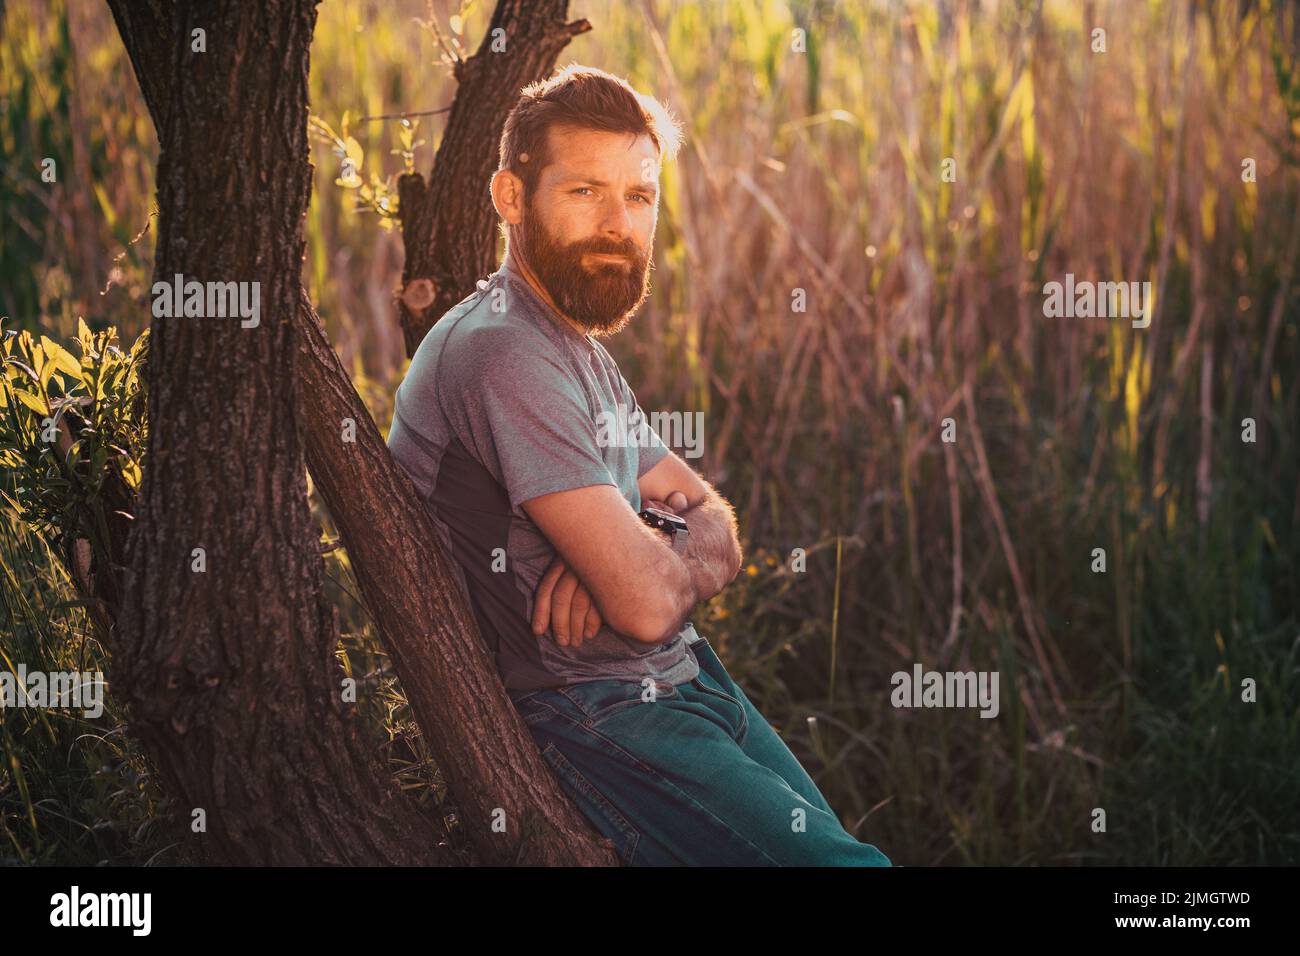 Handsome man enjoying nature outdoors Stock Photo